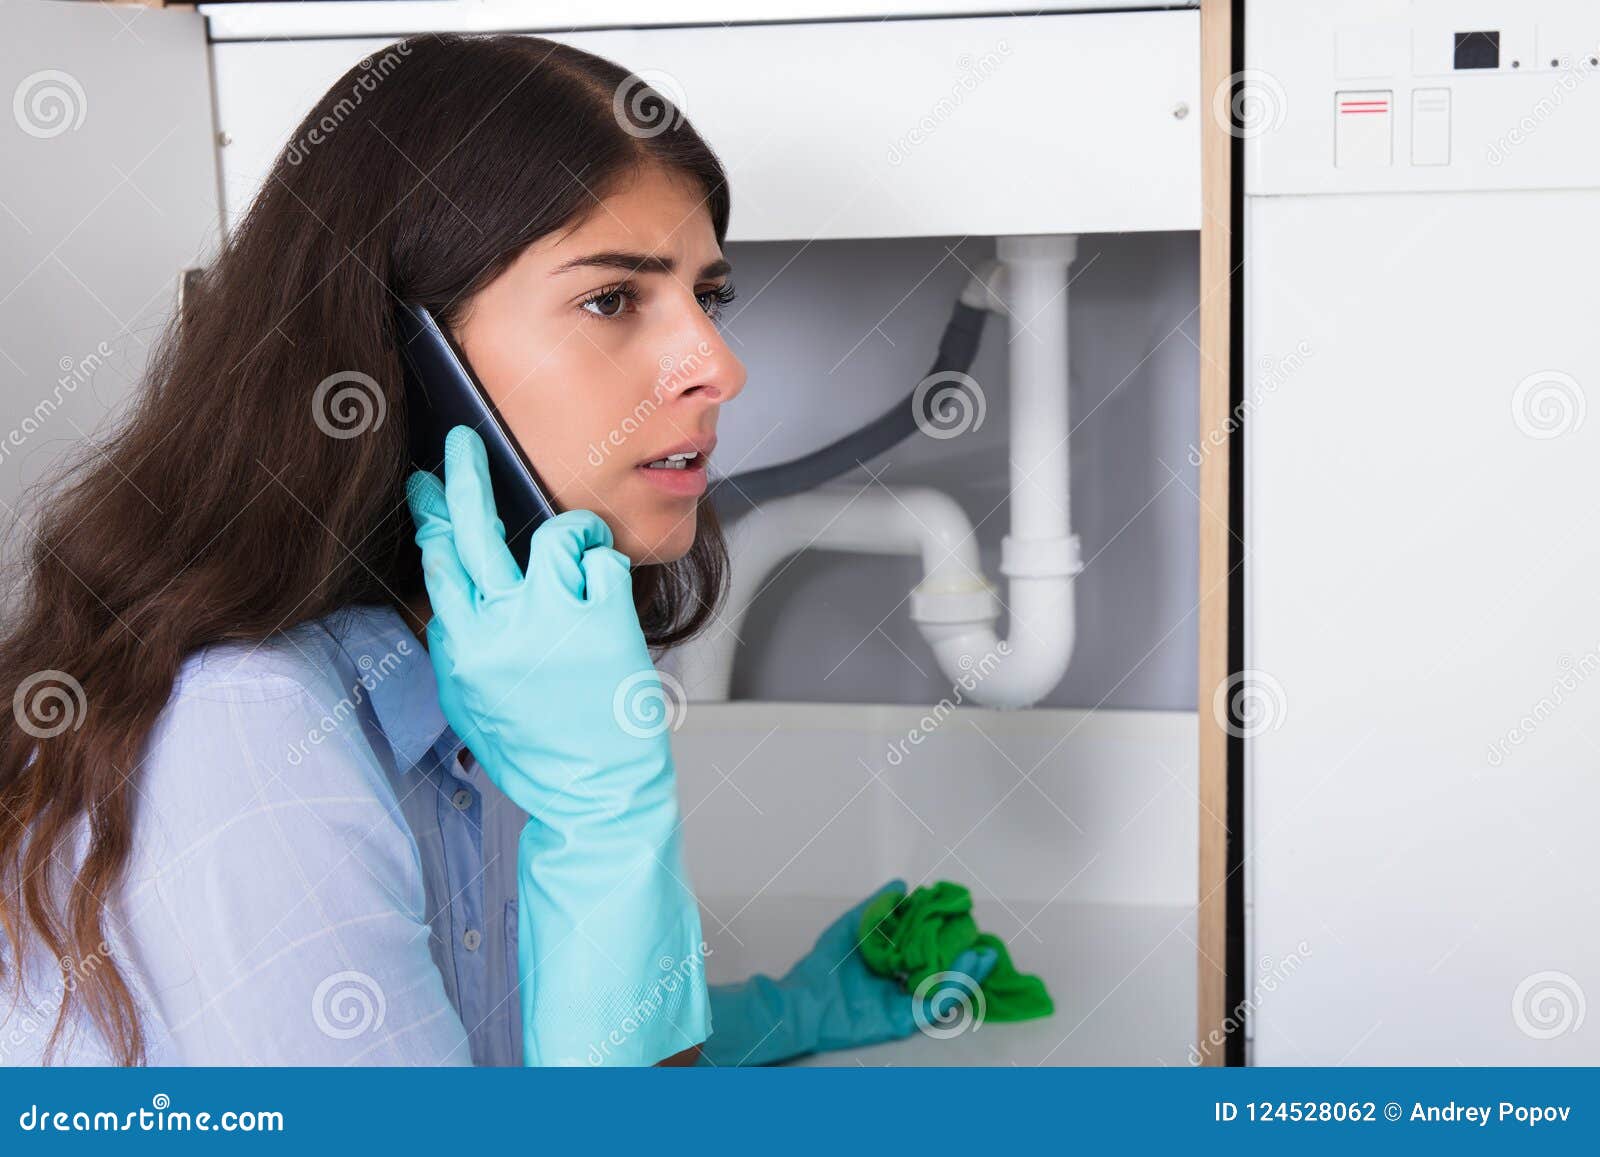 woman holding napkin under sink pipe leakage calling plumber